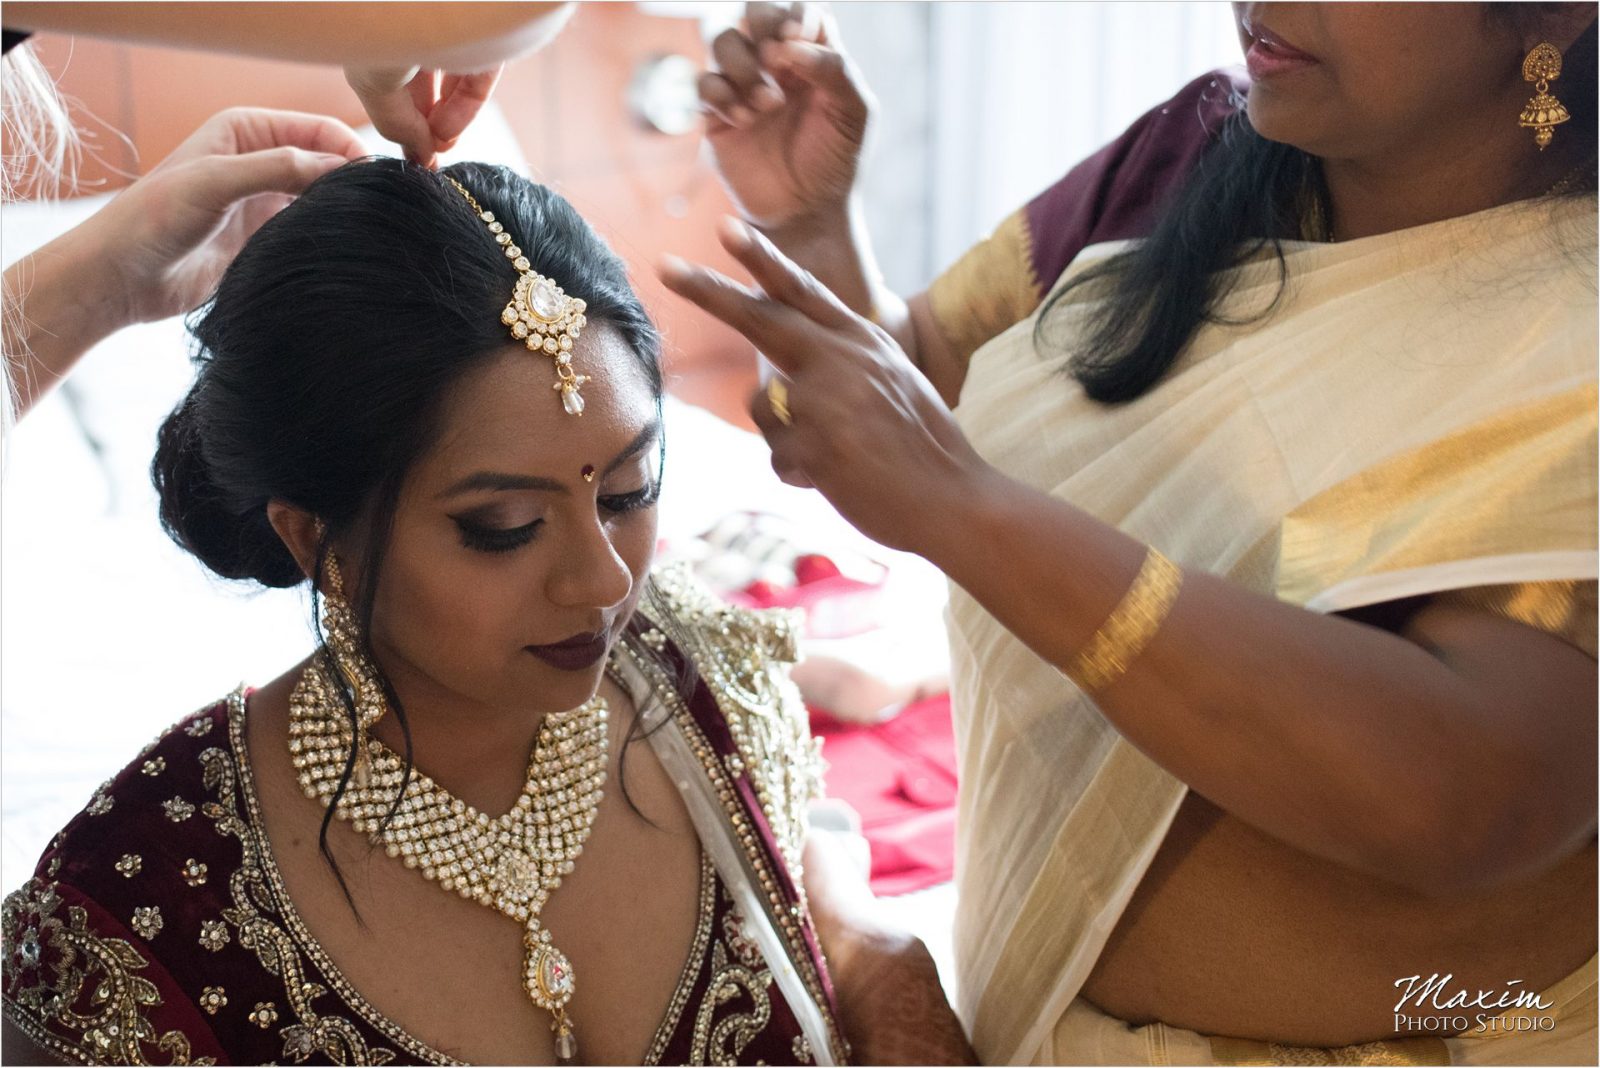 Savannah Center Indian Wedding Ceremony Reception preparations